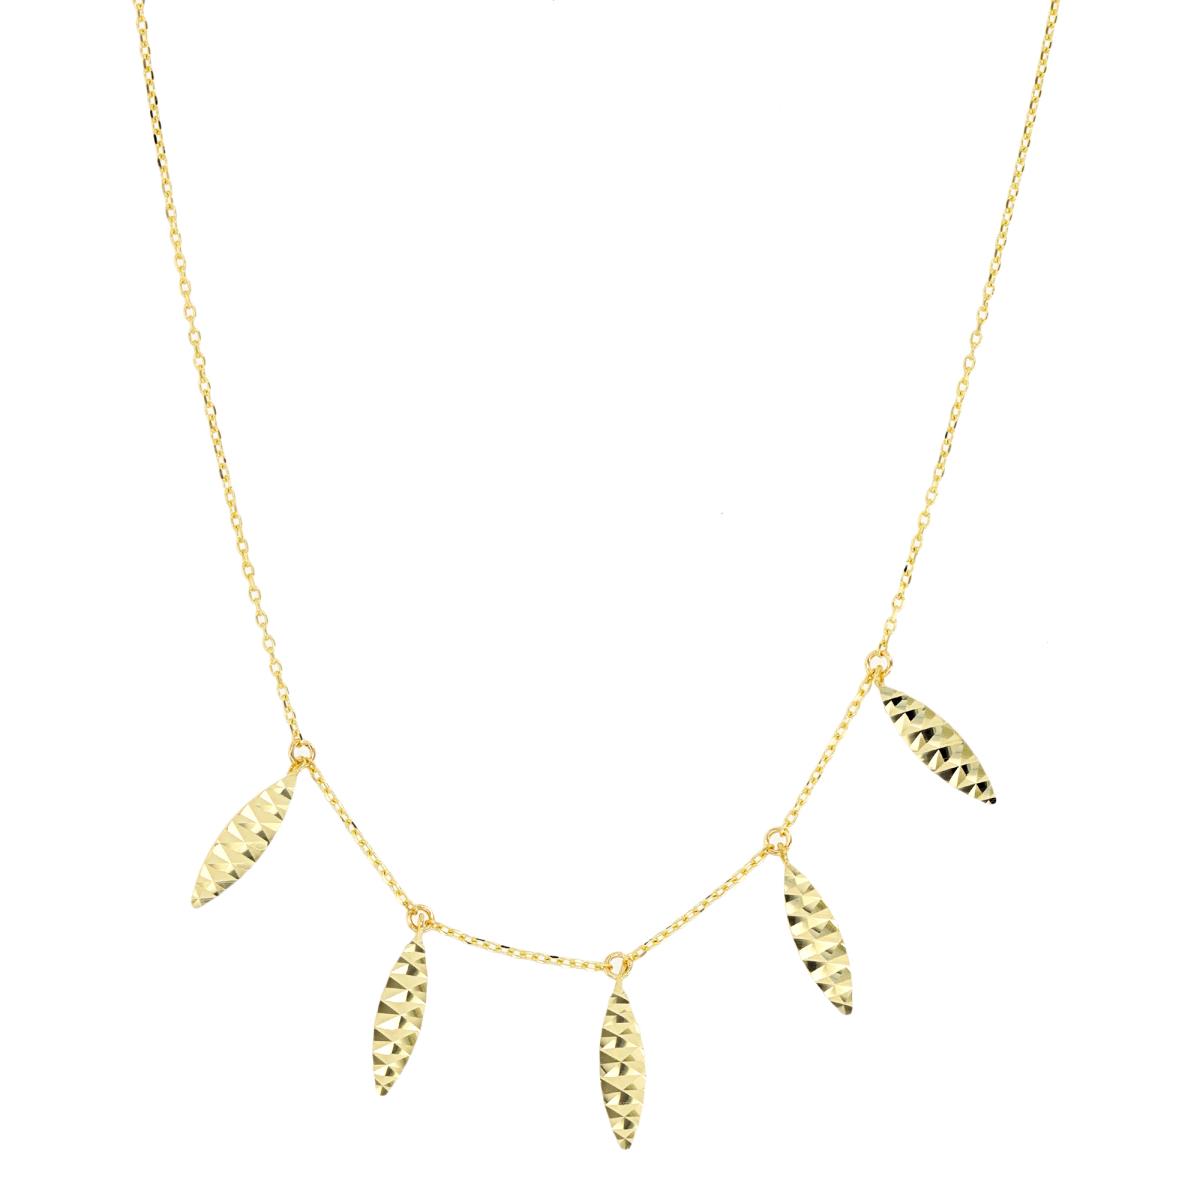 10K Yellow Gold Dangling Diamond Cut 18" Necklace